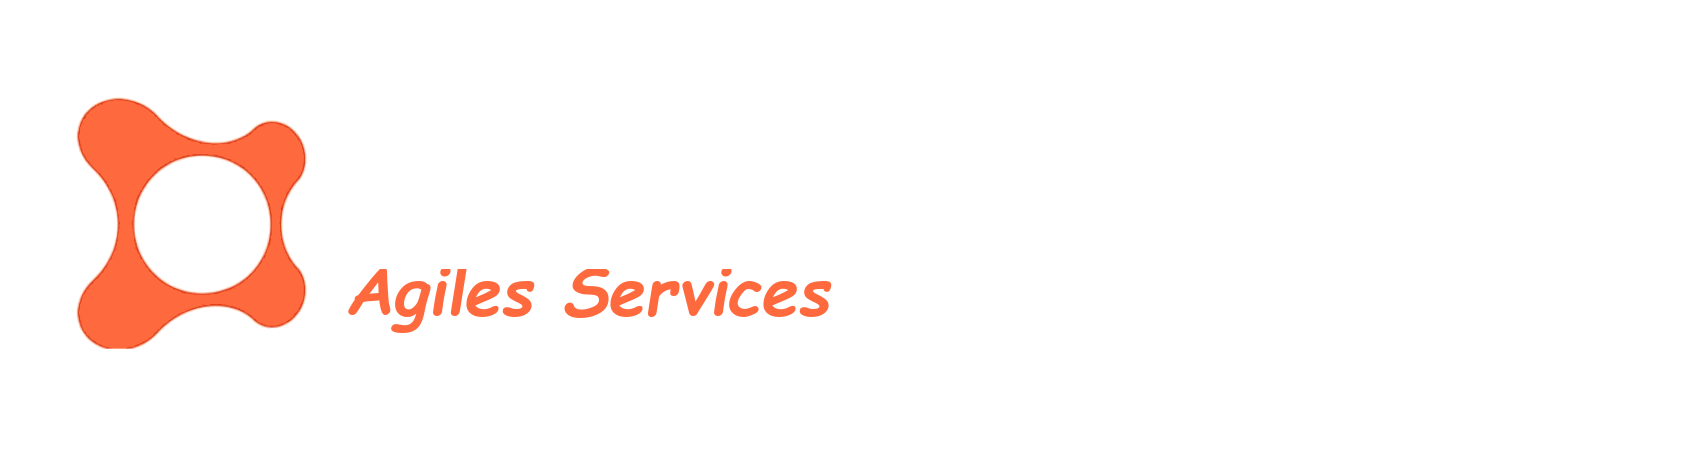 DSI As A Service